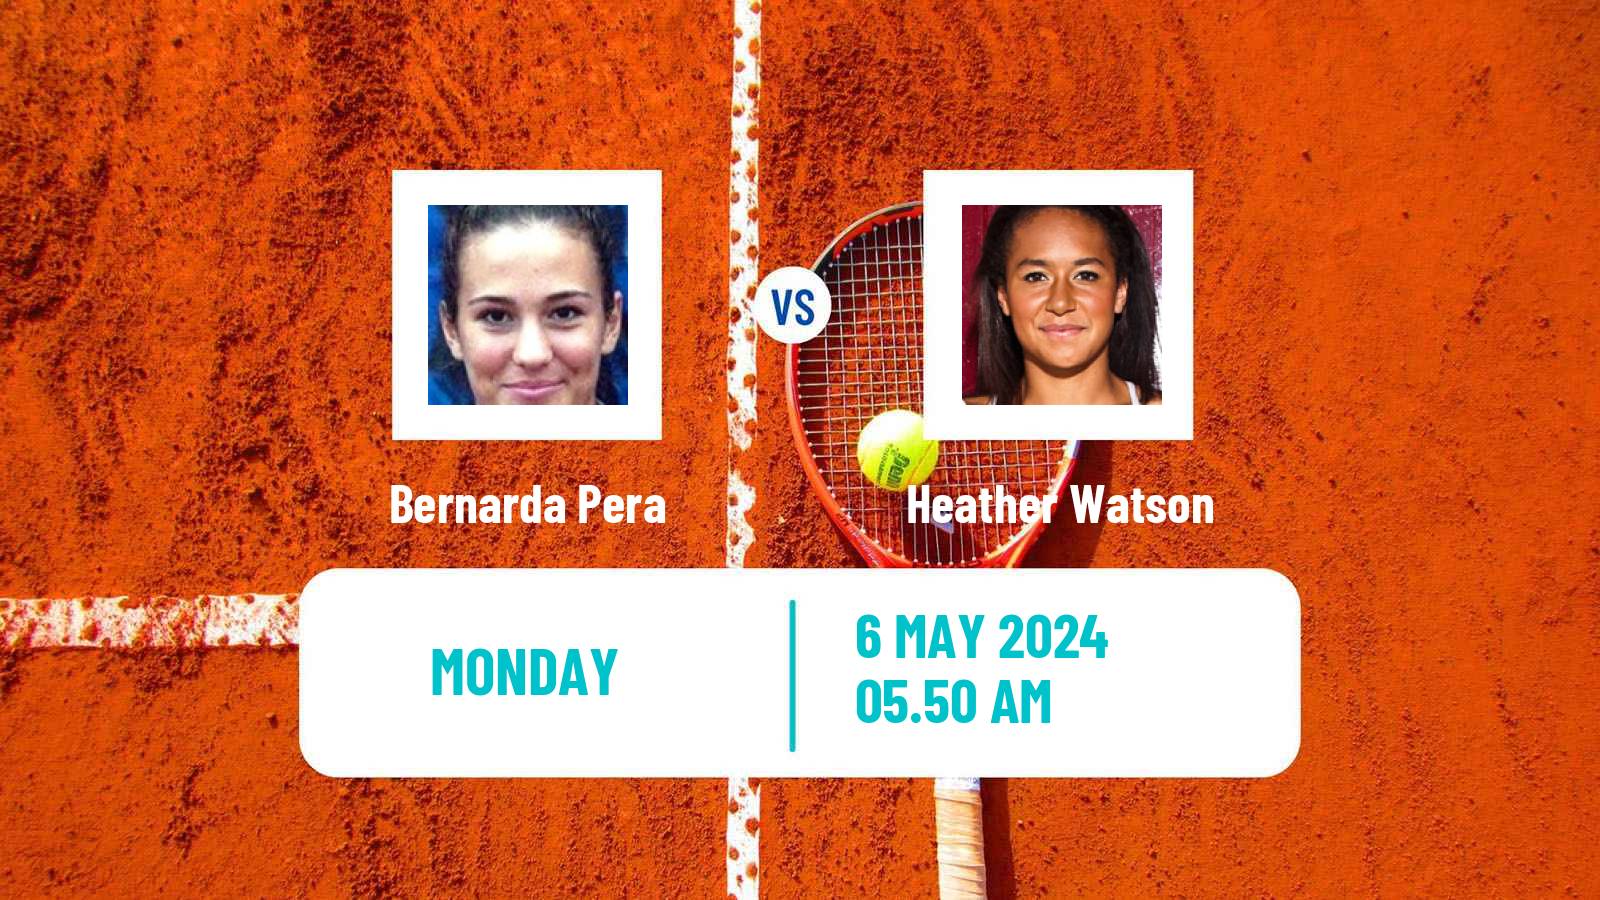 Tennis WTA Roma Bernarda Pera - Heather Watson